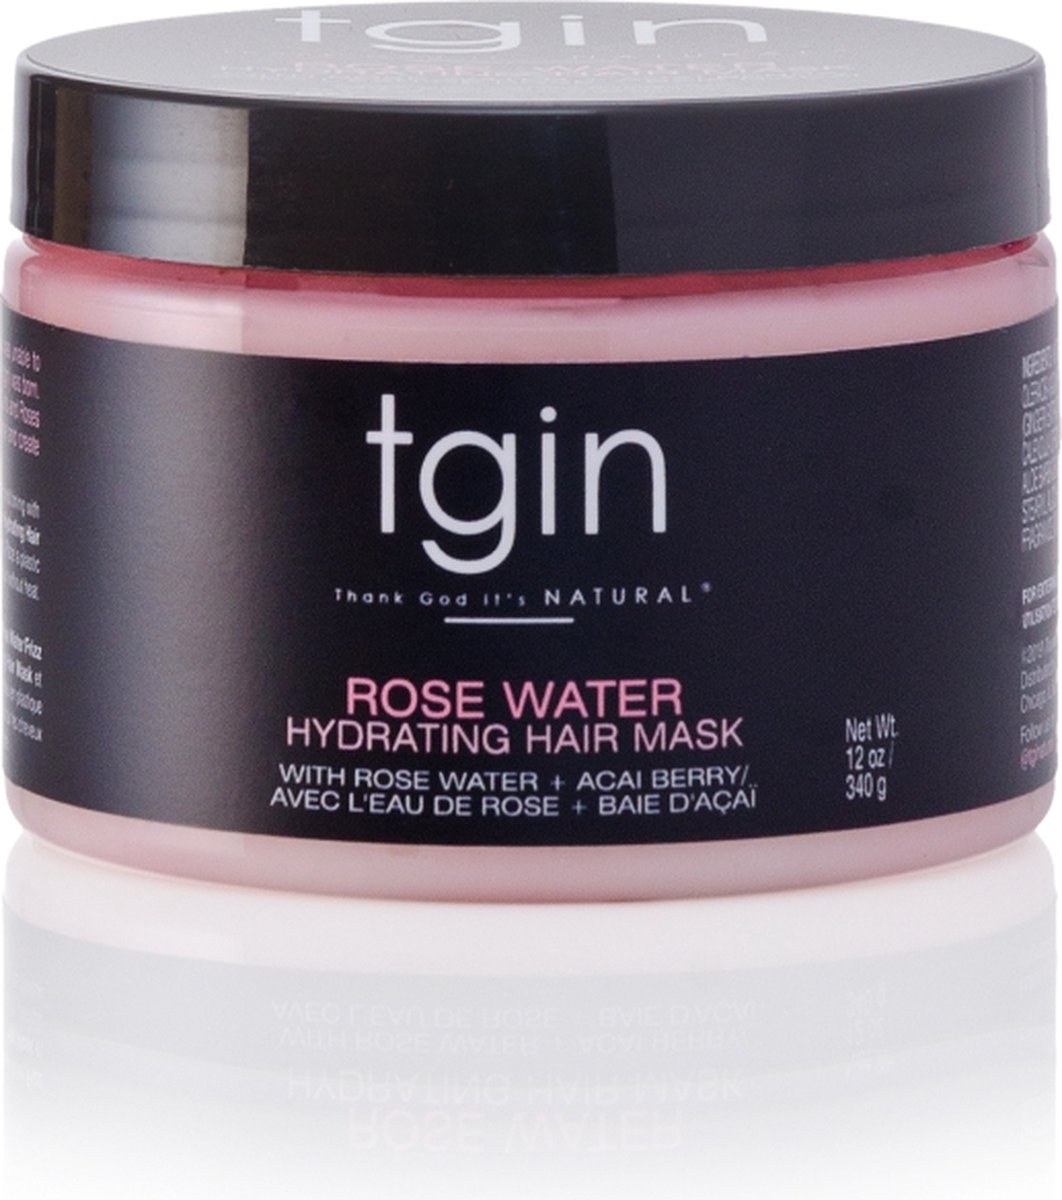 Tgin Rose Water Hydrating Hair Mask (12oz/340g)